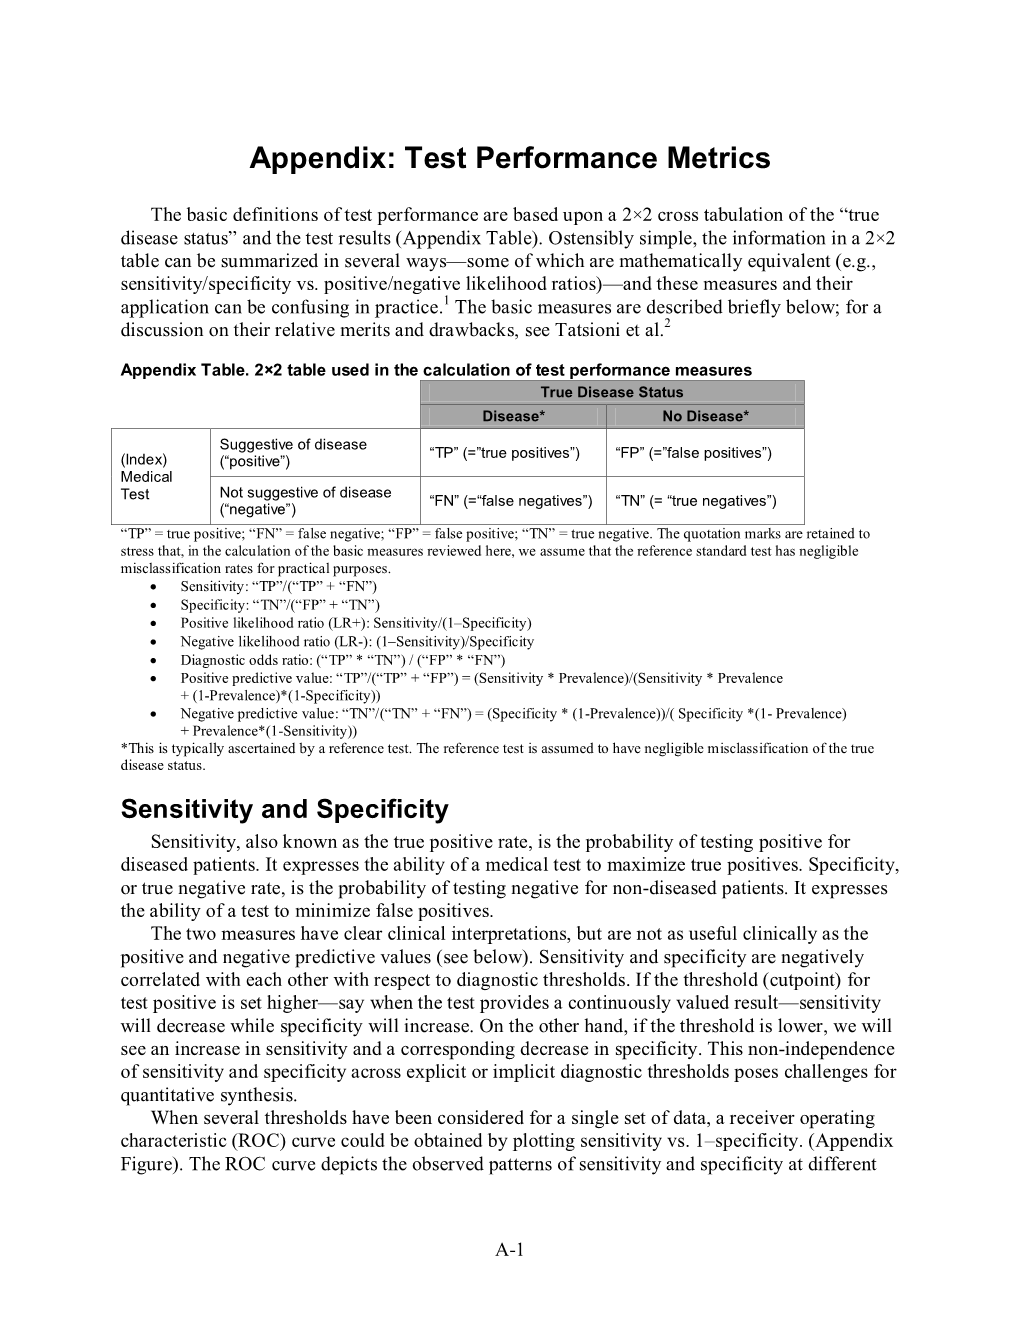 Test Performance Metrics